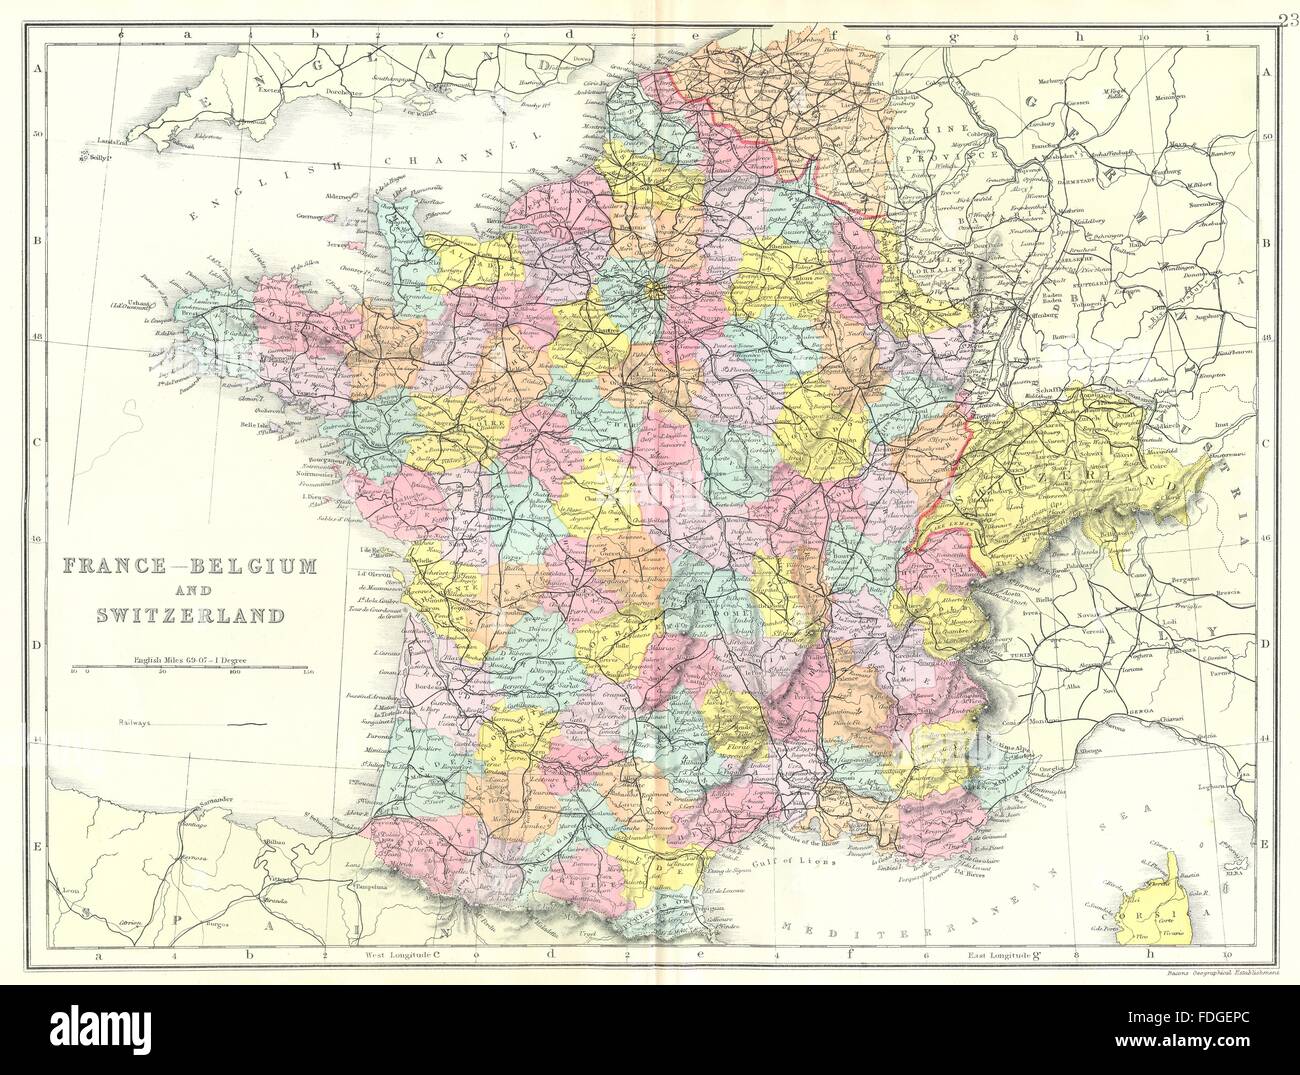 France Belgium Switzerland France Without Alsace Lorraine Bacon 1895 FDGEPC 